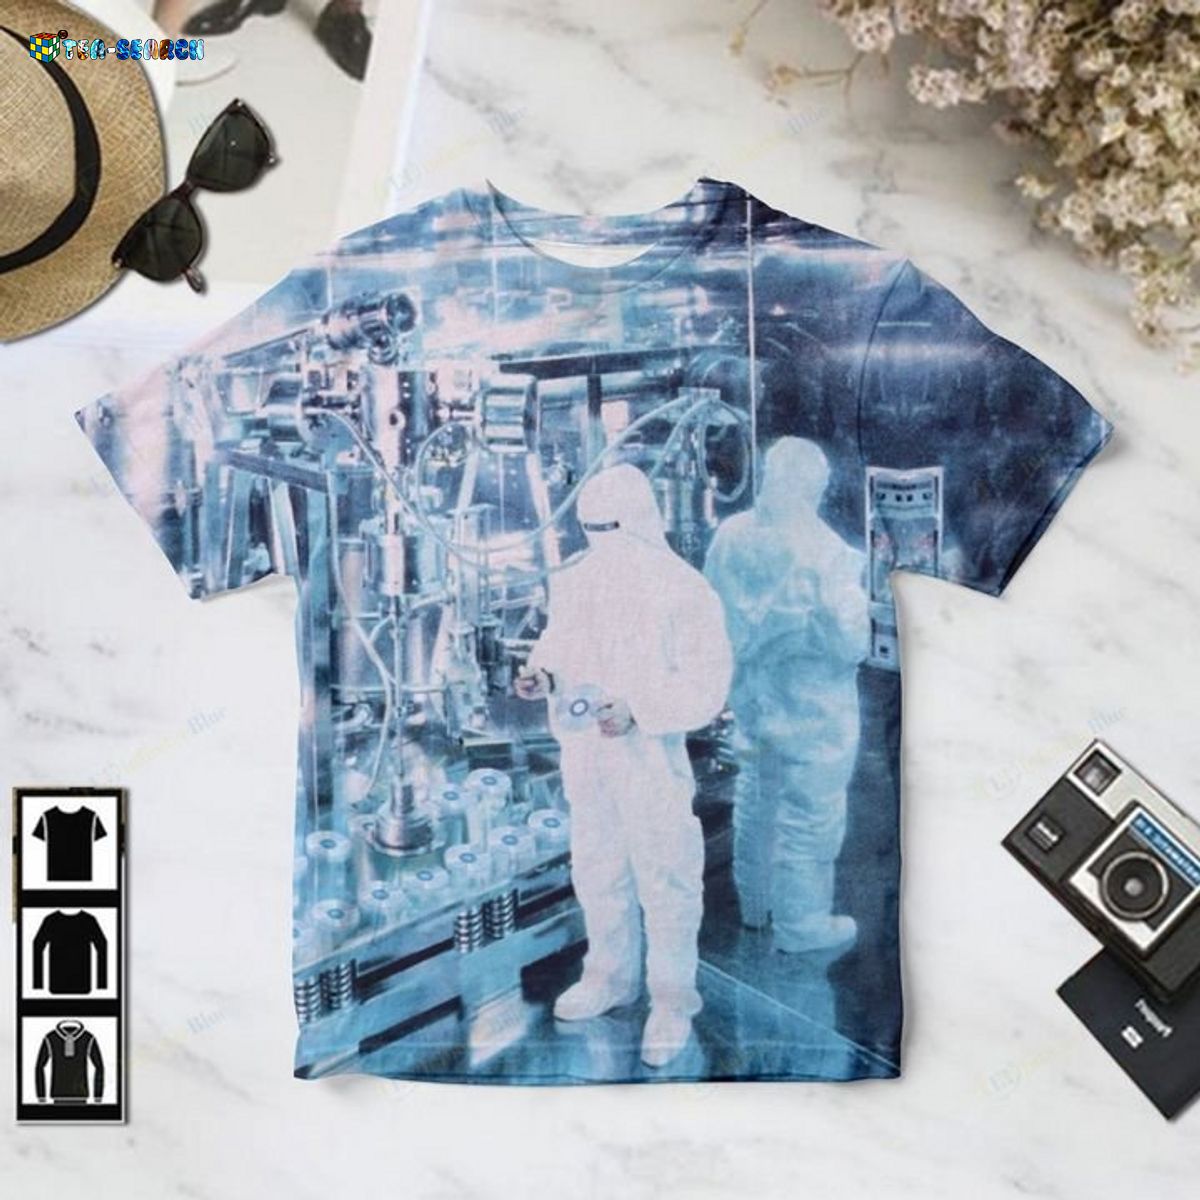 Best Sale Porcupine Tree Stupid Dream All Over Print Shirt